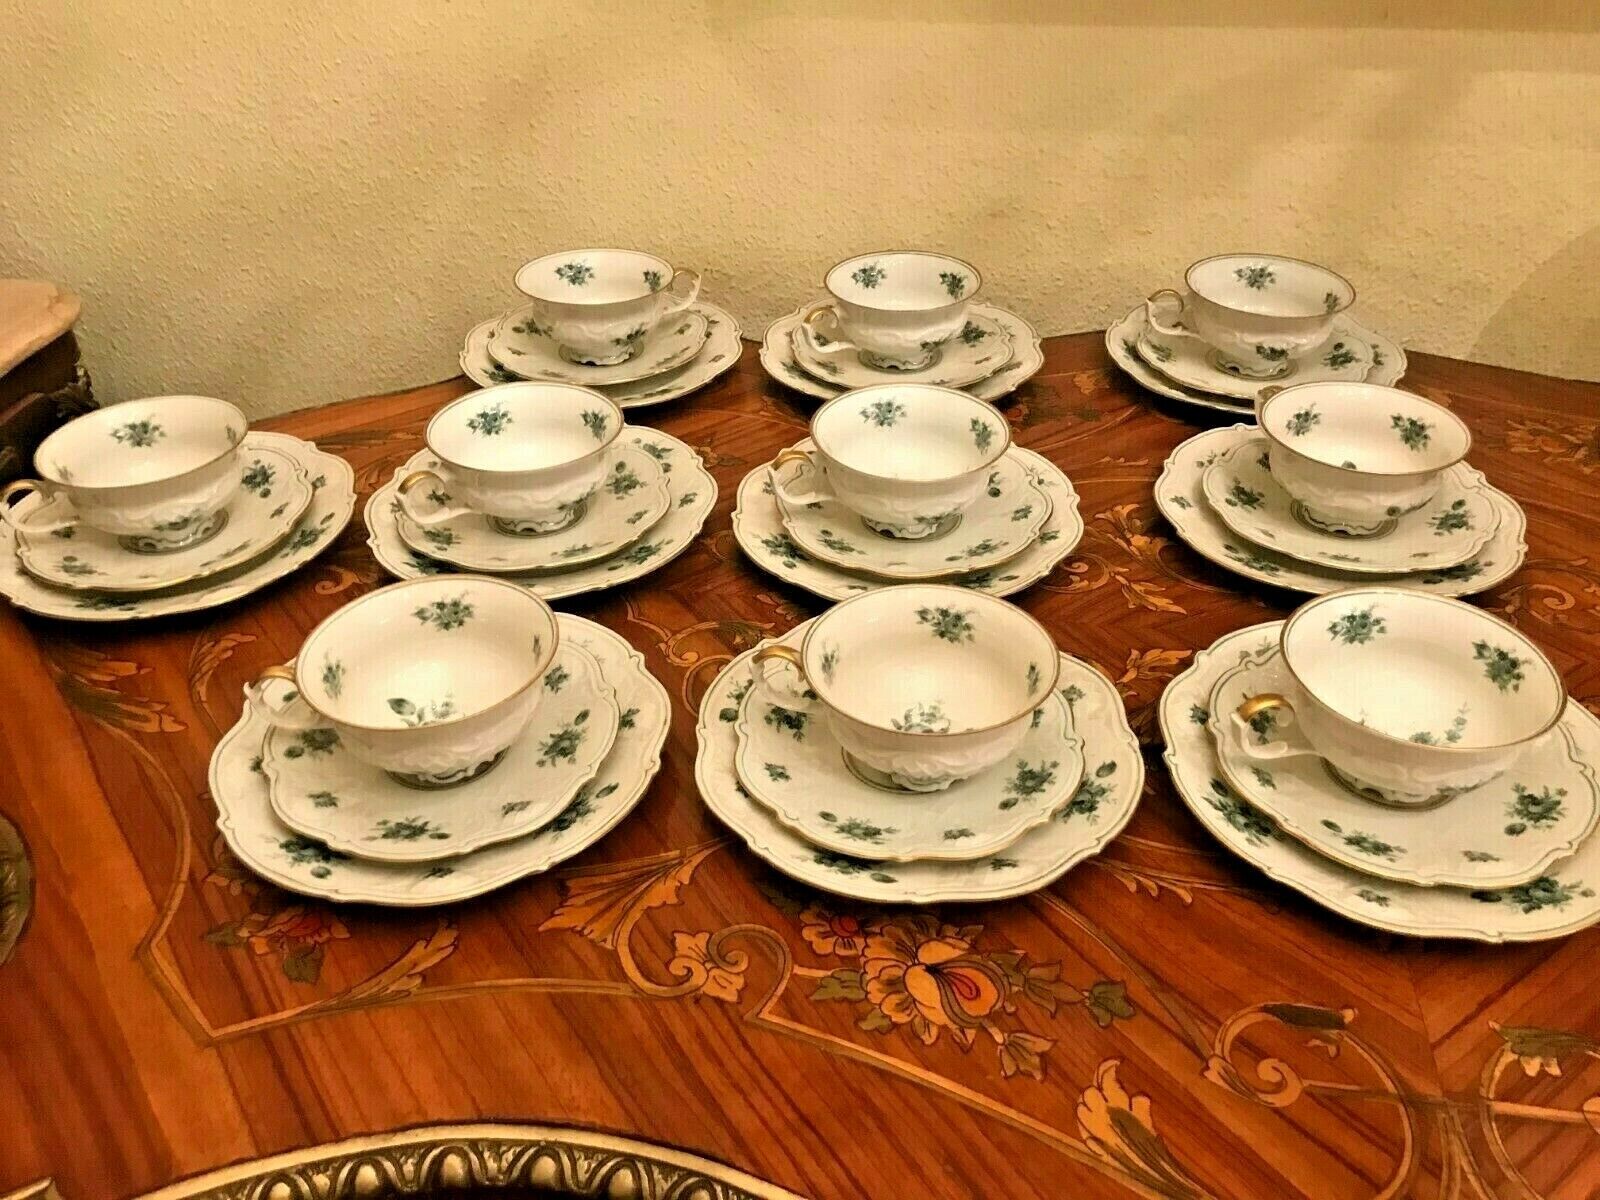  Antique10 Cups 10 Saucers Cake plates VEB German Porcelain Coffee Set